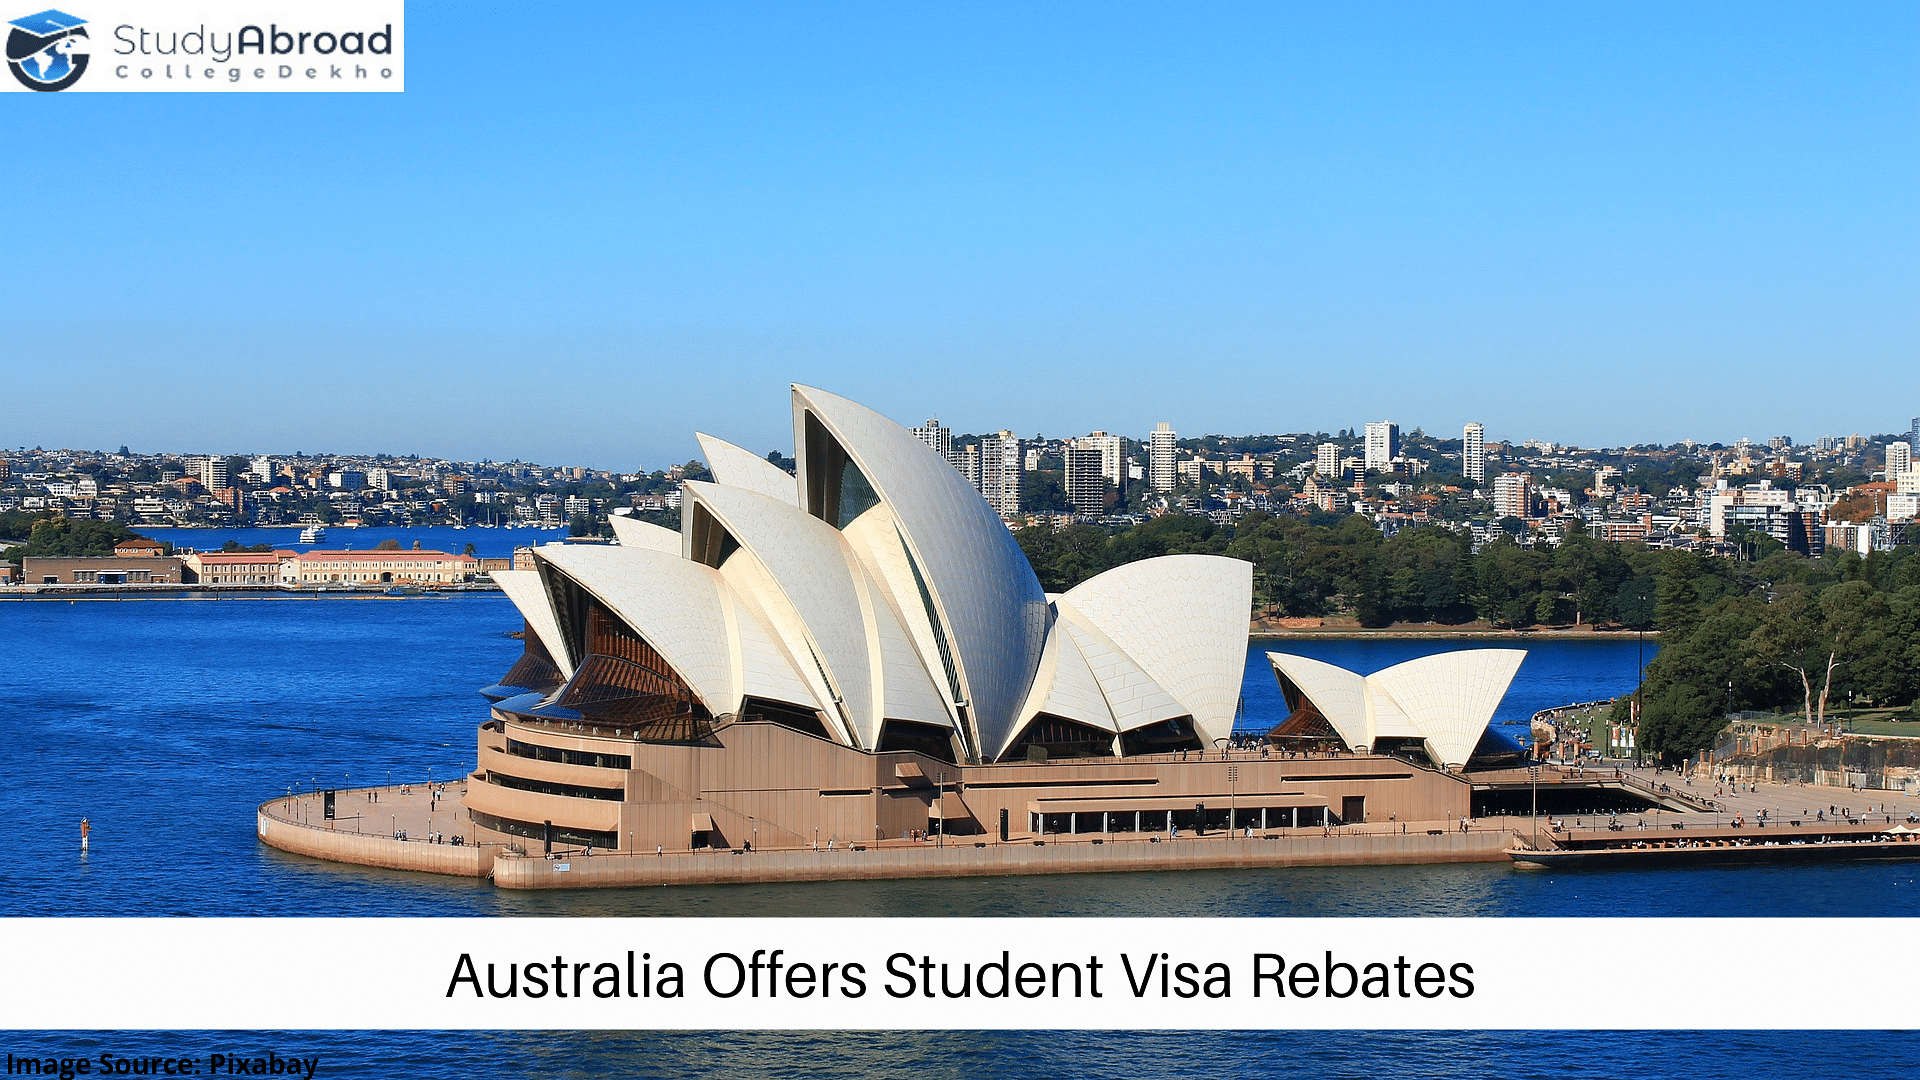 Australia Offers Student Visa Rebates